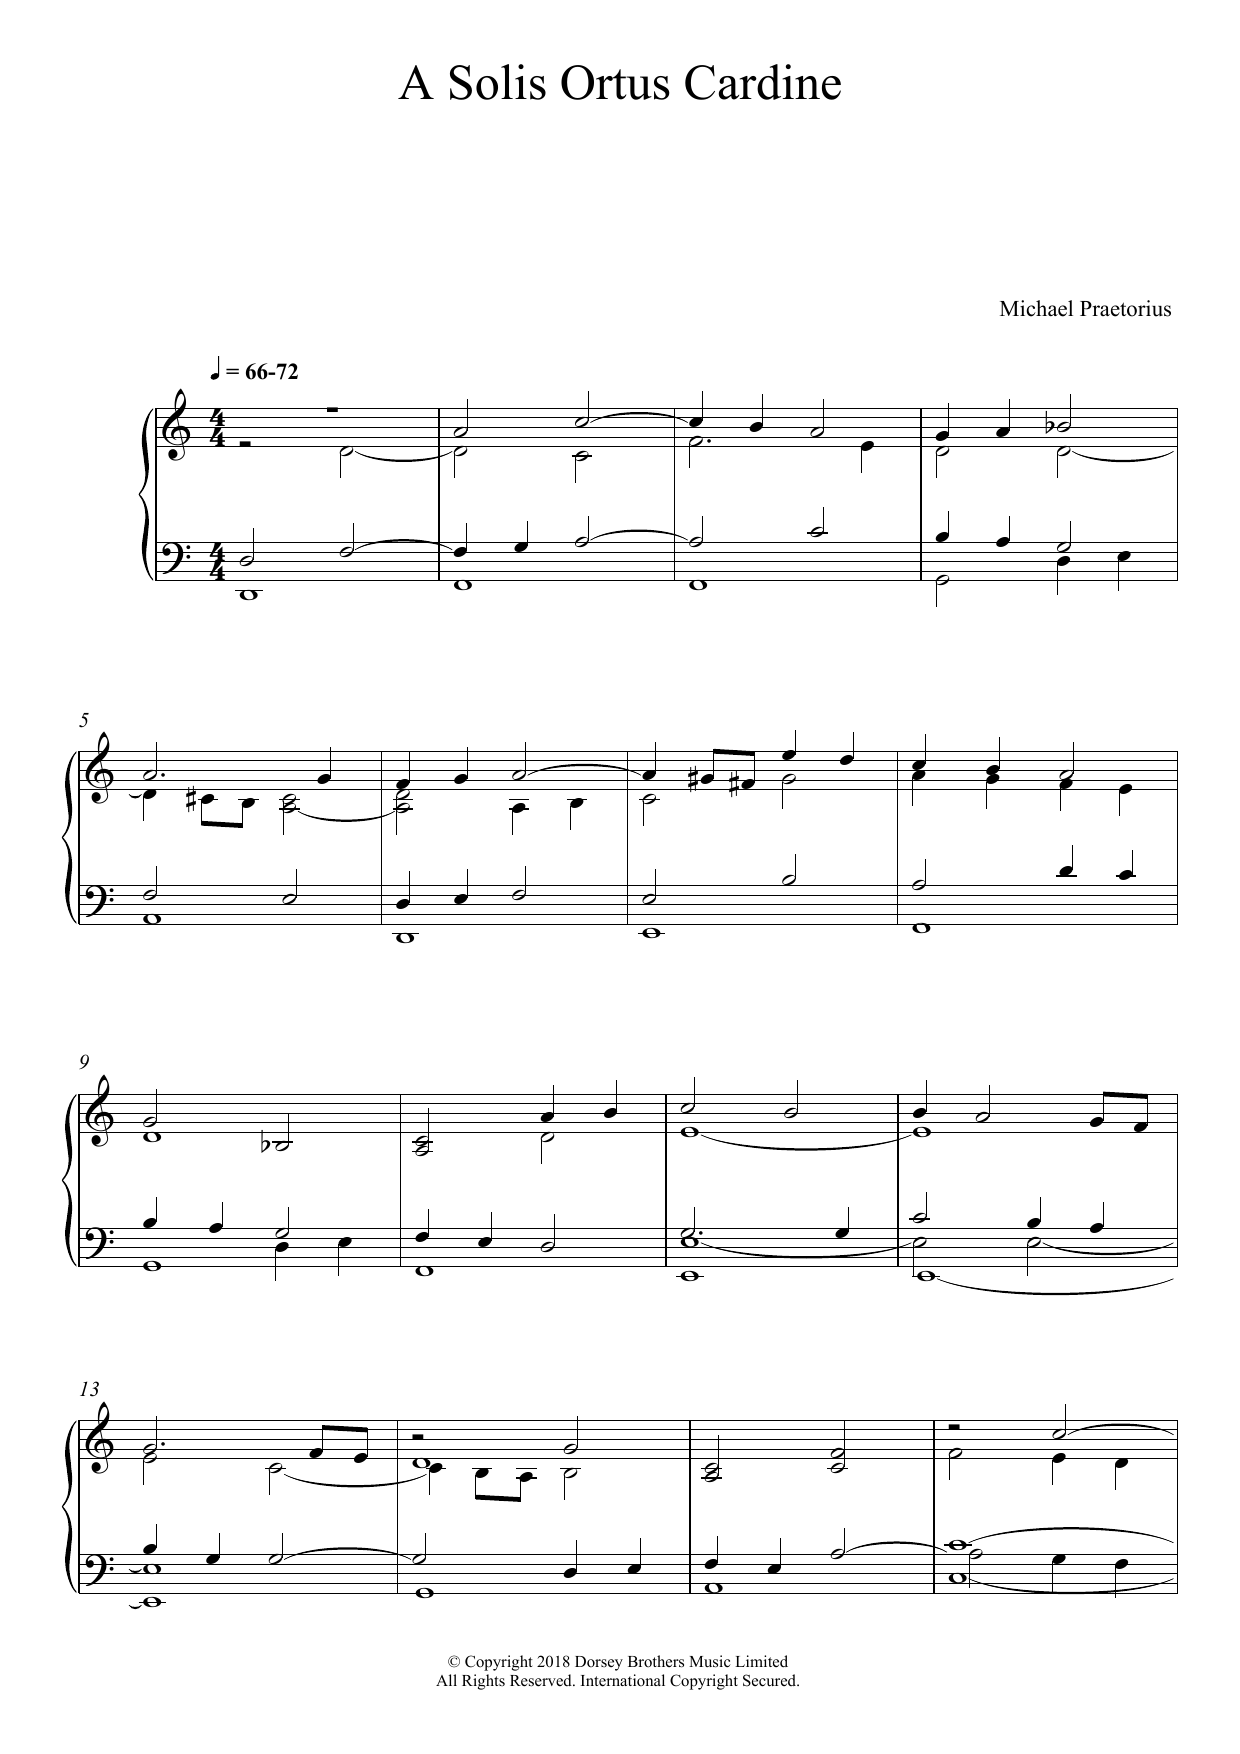 Michael Praetorius A Solis Ortus Cardine Sheet Music Notes & Chords for Piano - Download or Print PDF